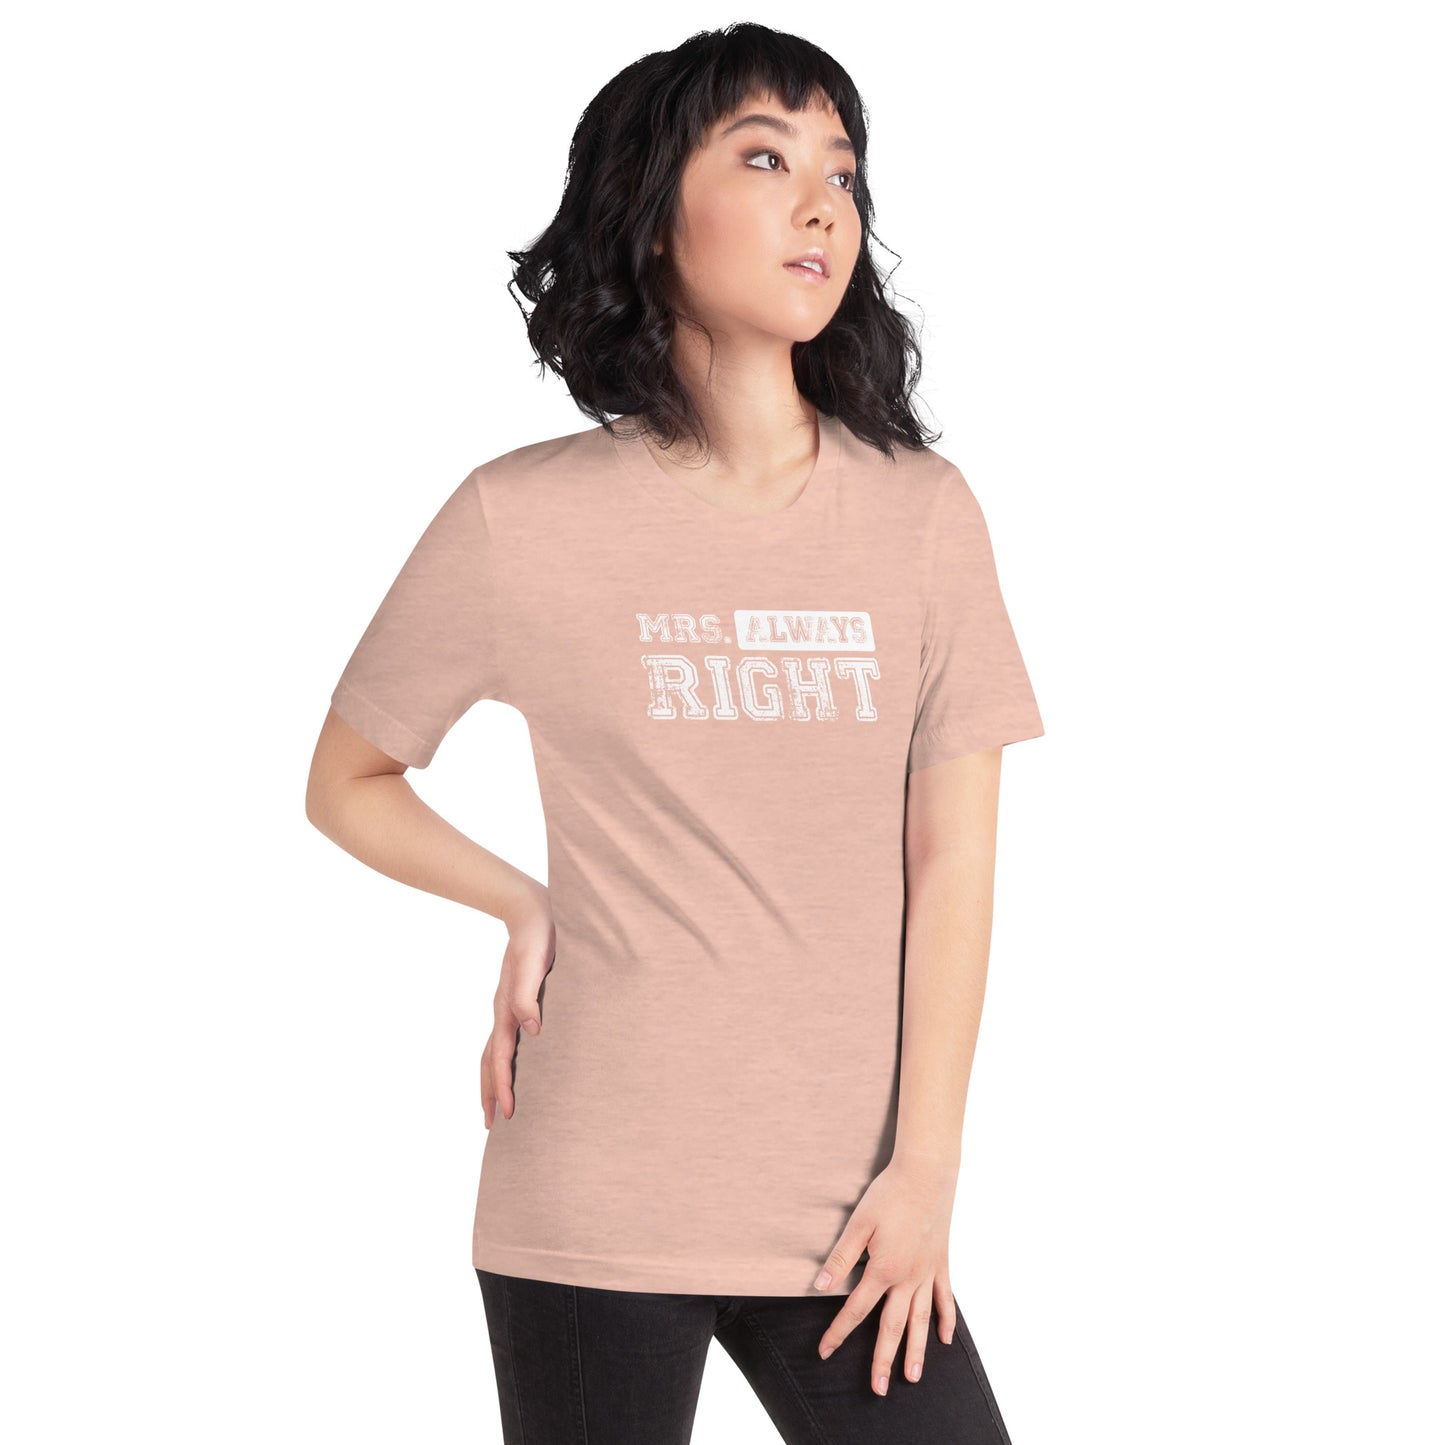 Mrs. Always Right Unisex t-shirt